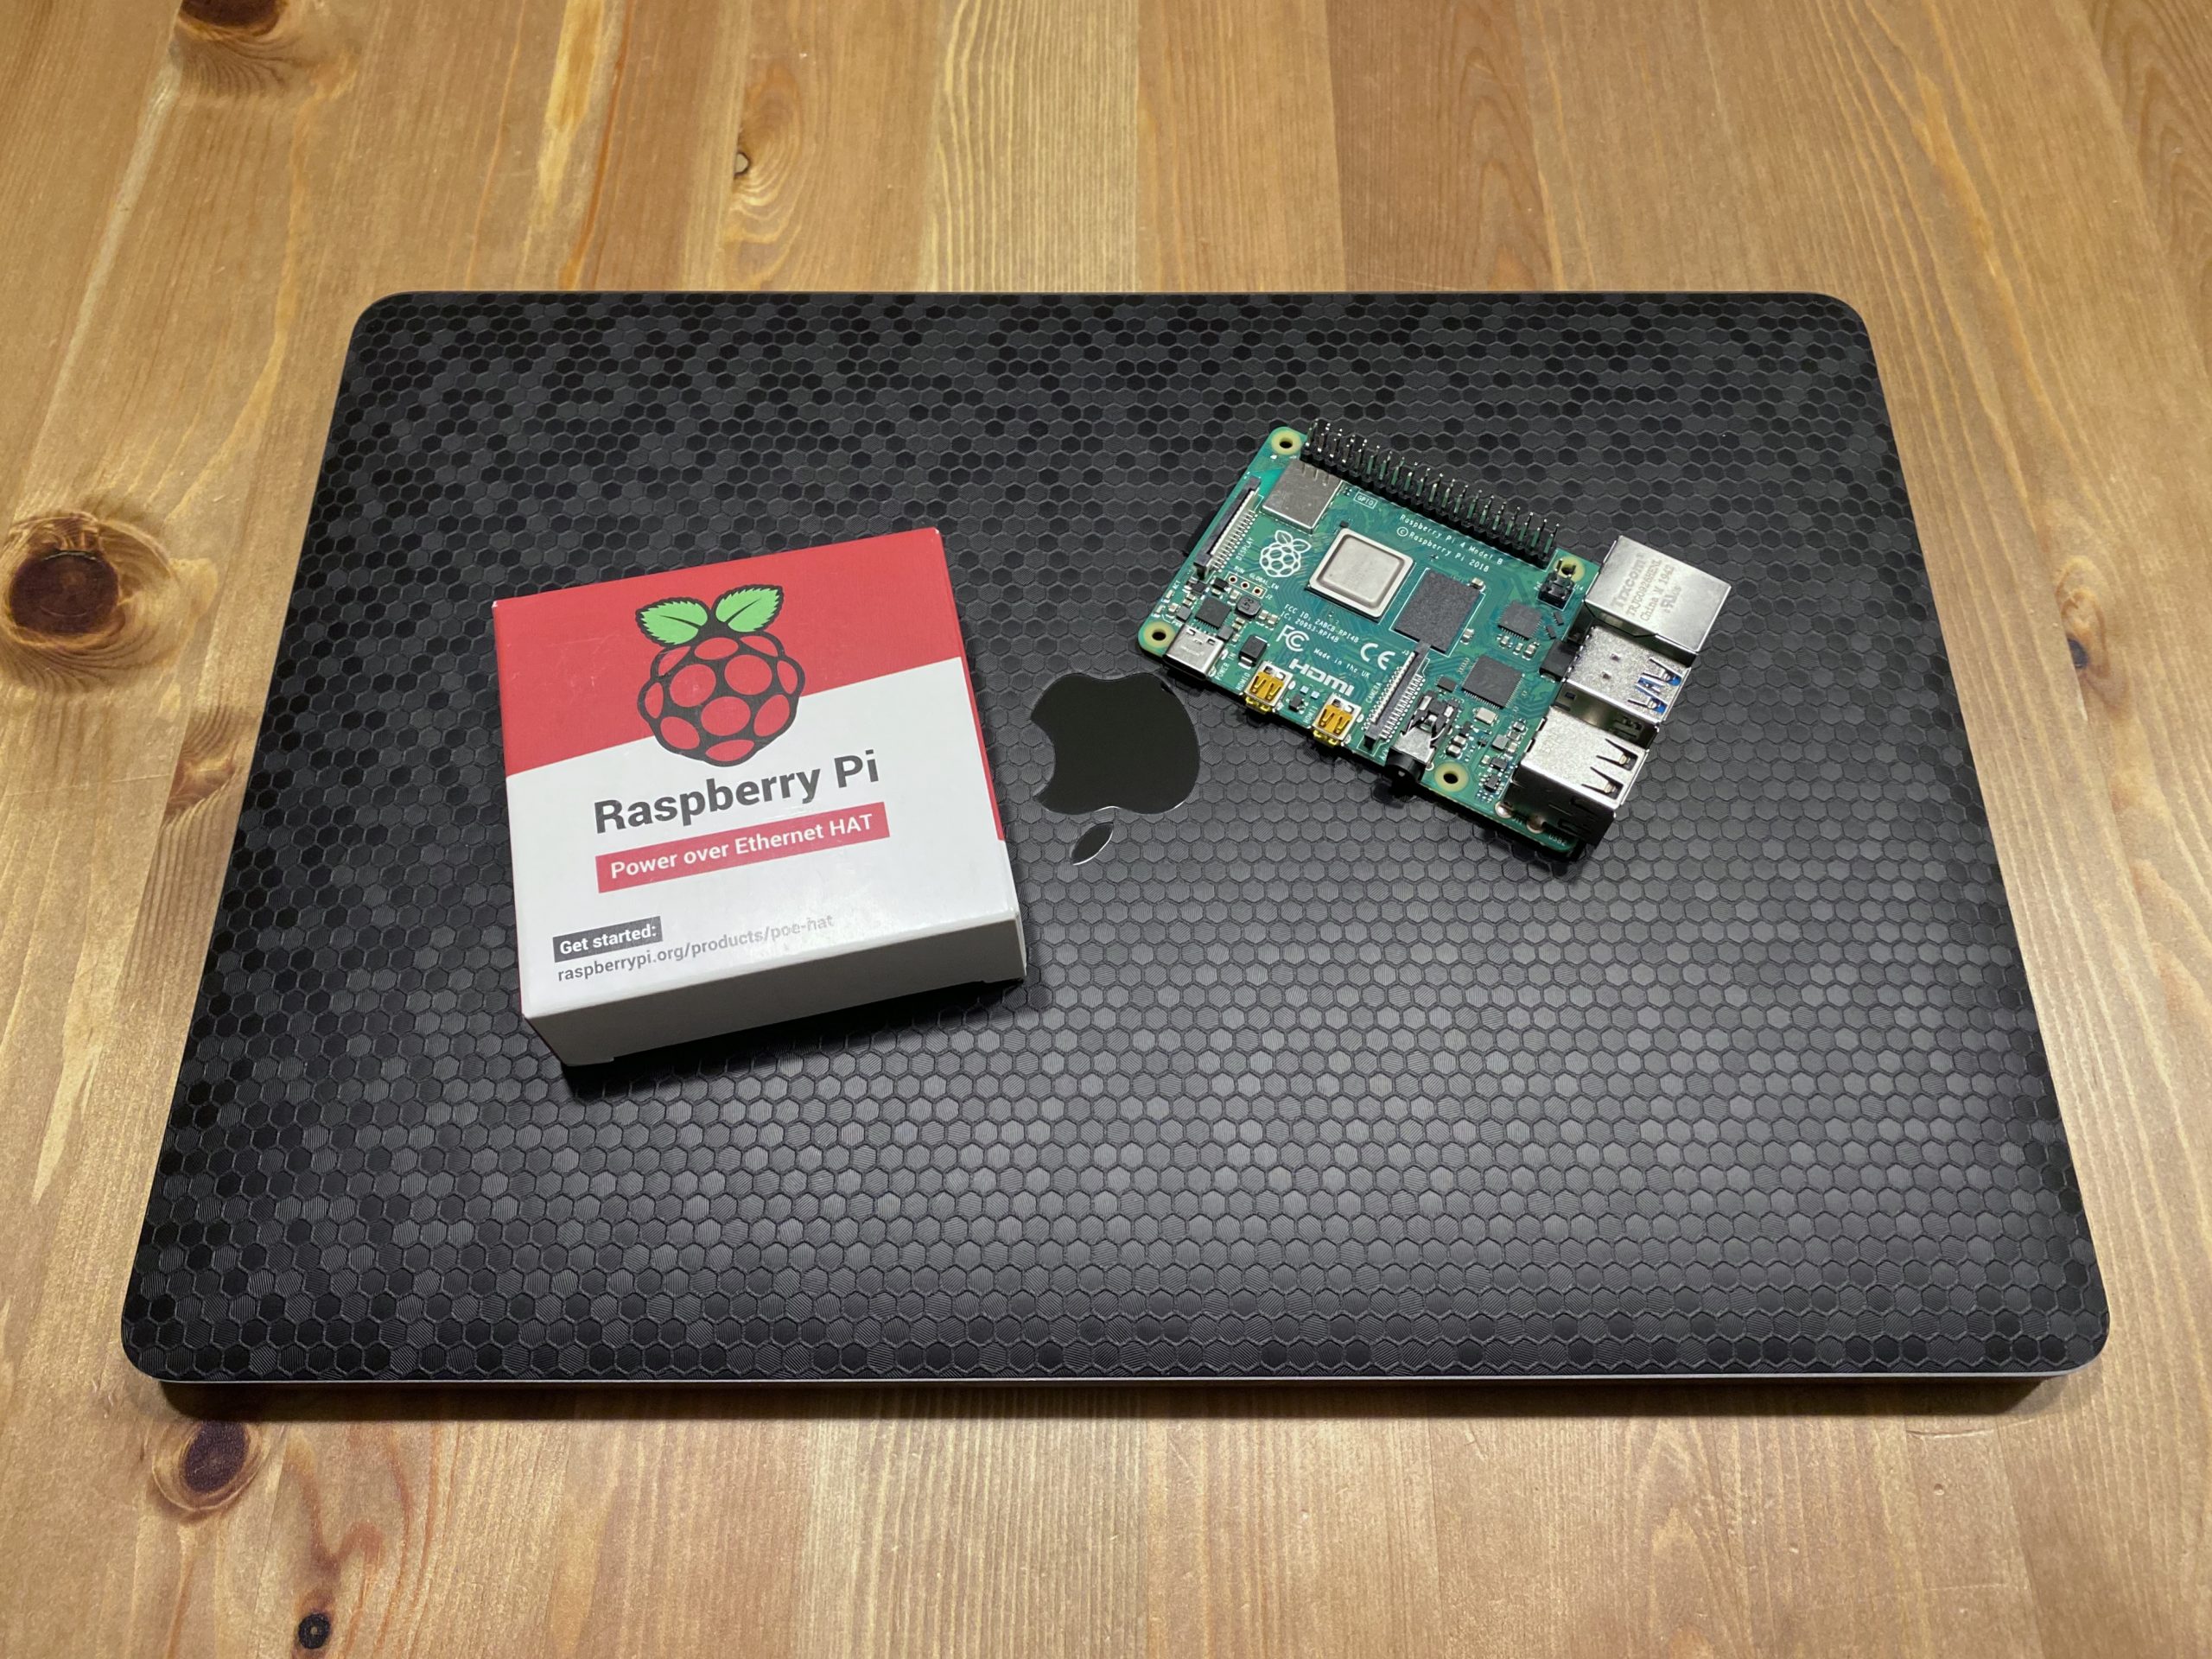 Installing docker and docker-compose on a Raspberry Pi 4